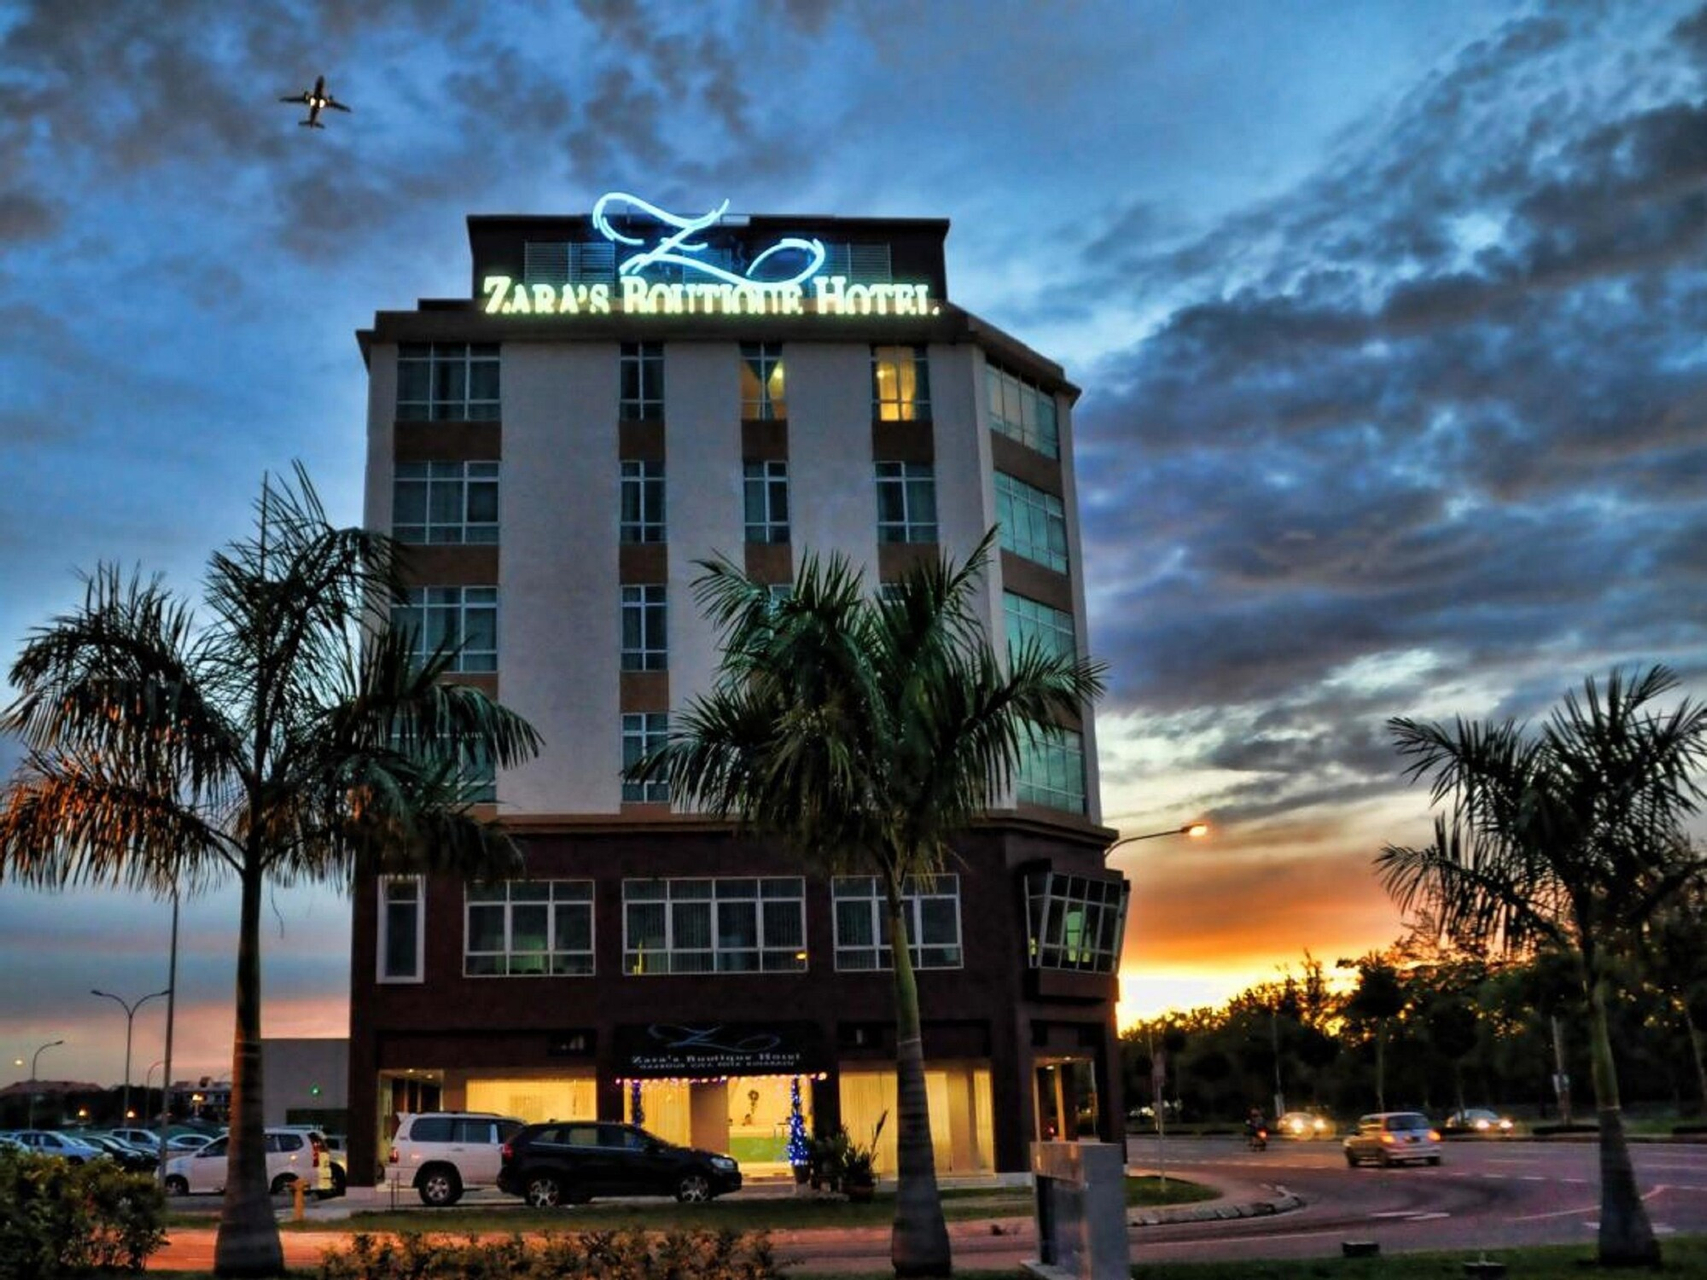 Exterior & Views 1, Zara's Boutique Hotel, Kota Kinabalu